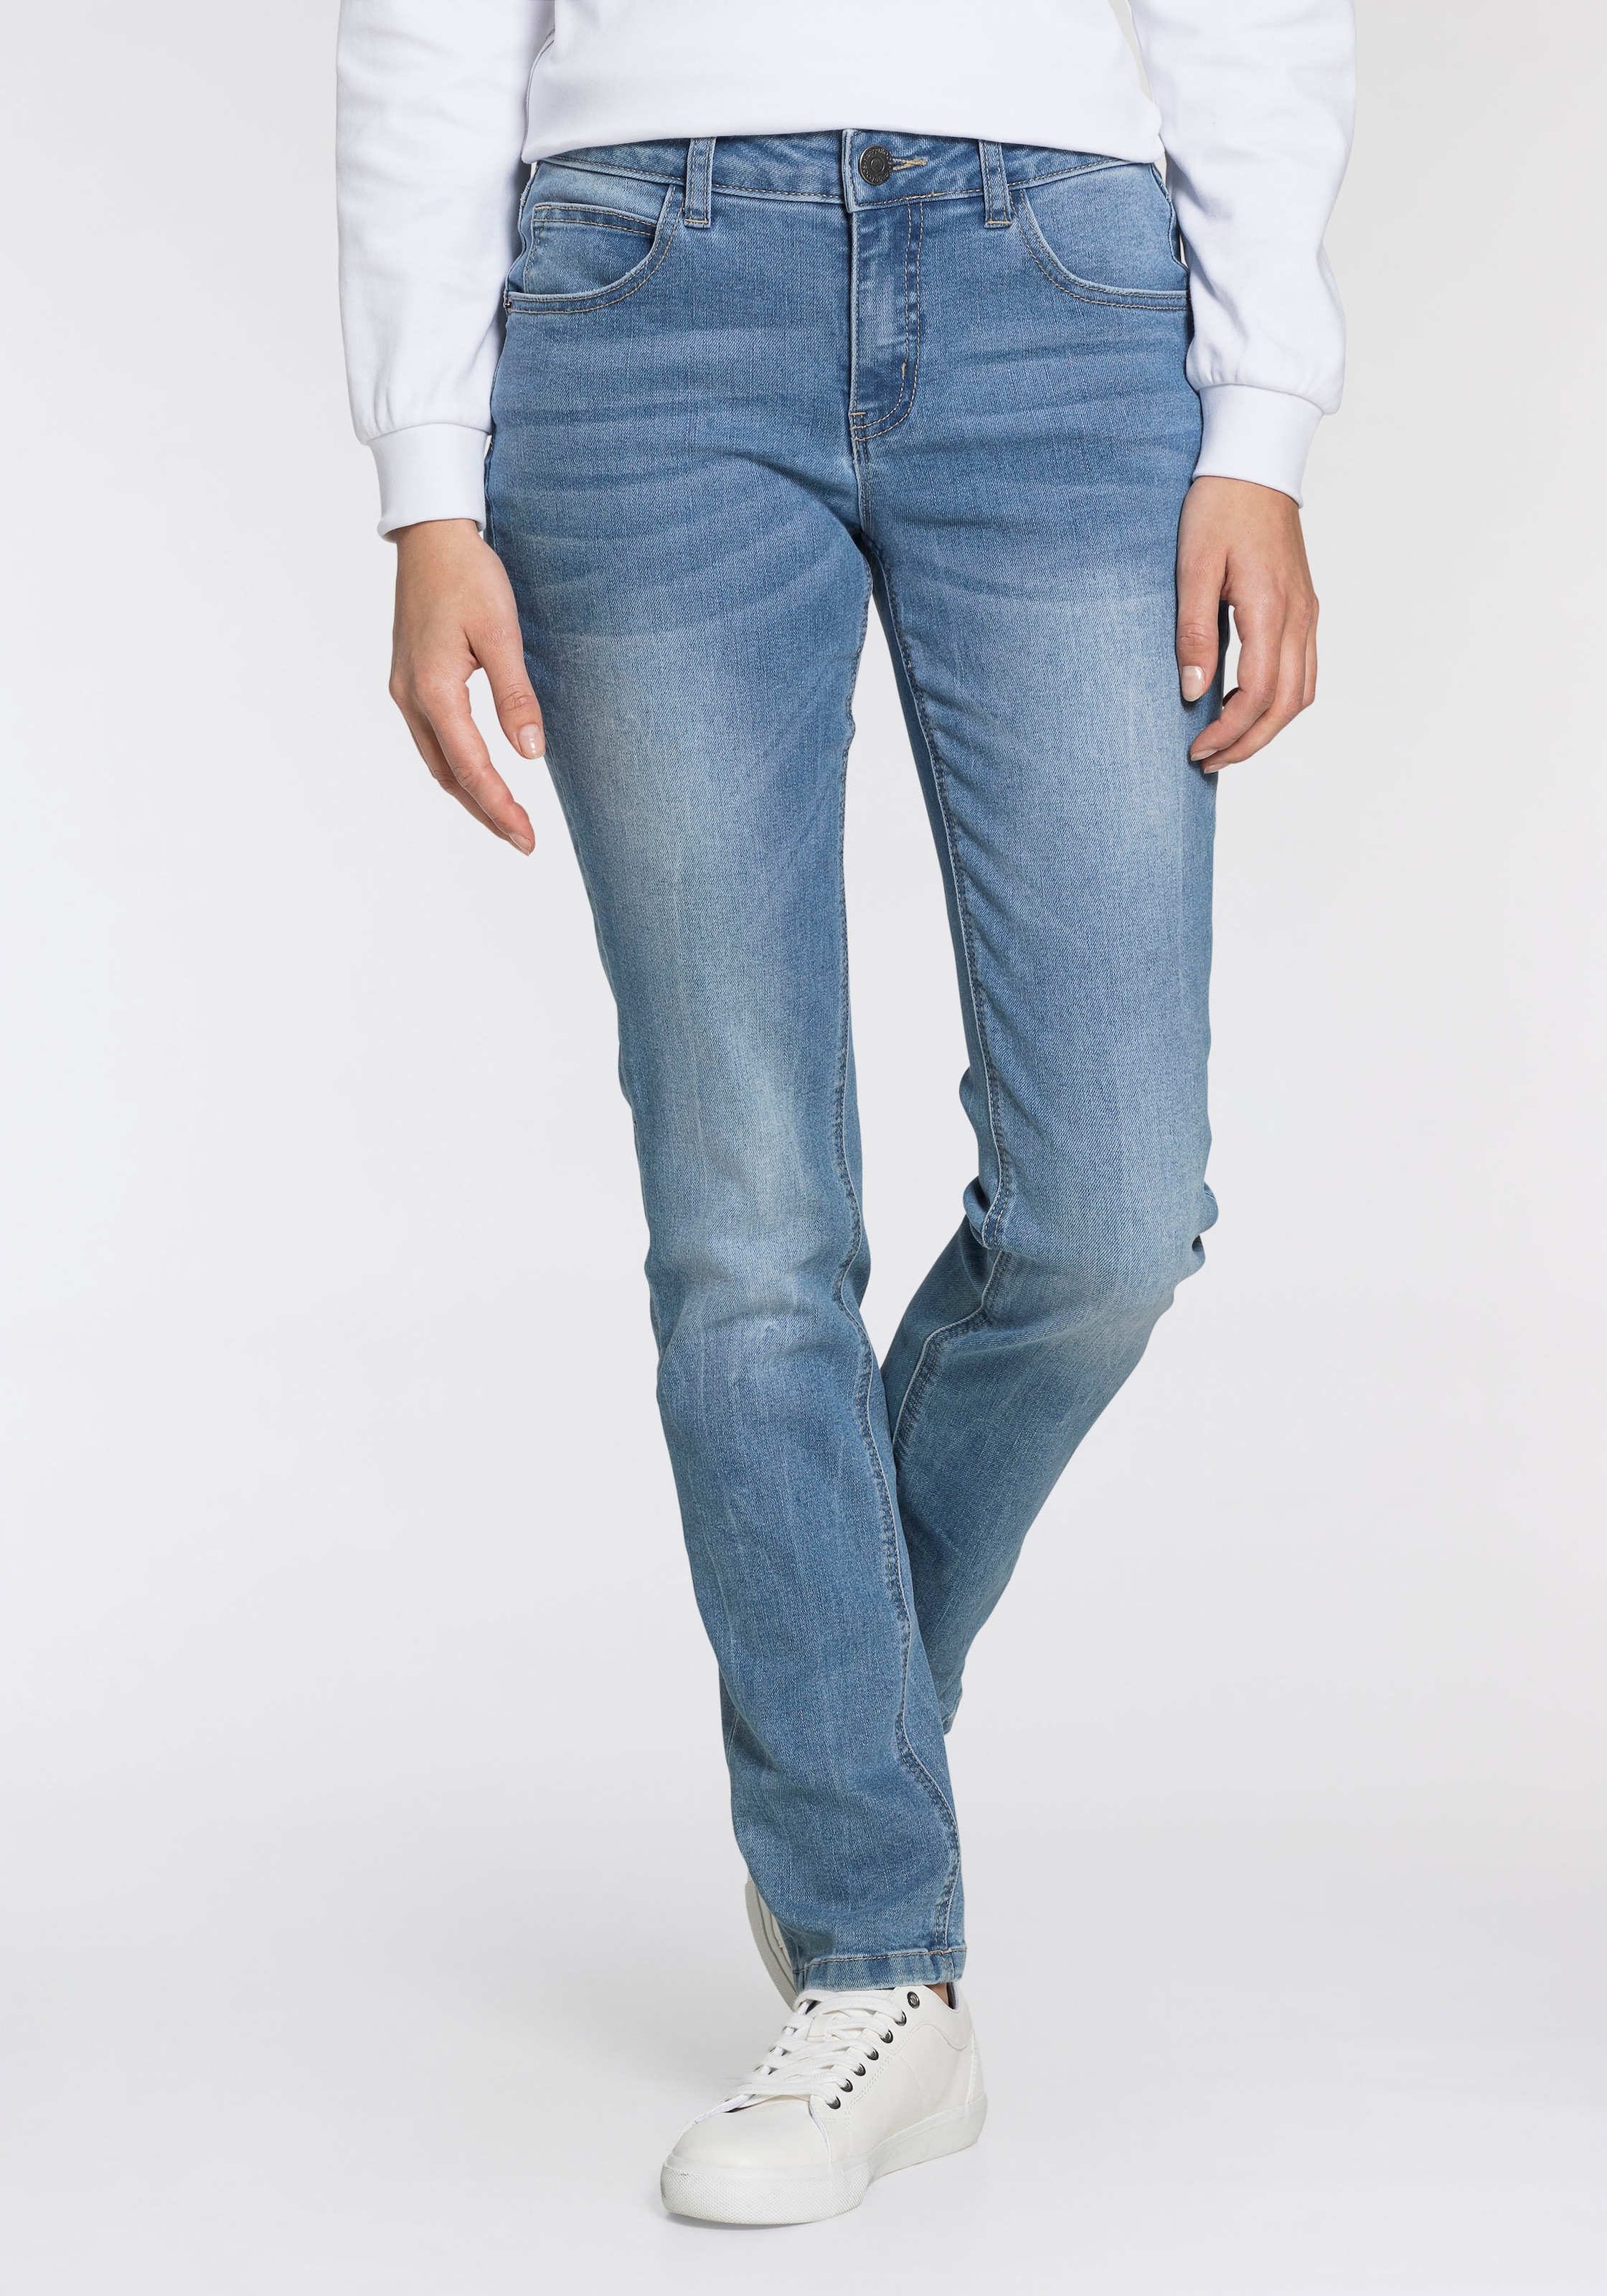 Trendige KangaROOS ♕ kaufen online Jeans jetzt